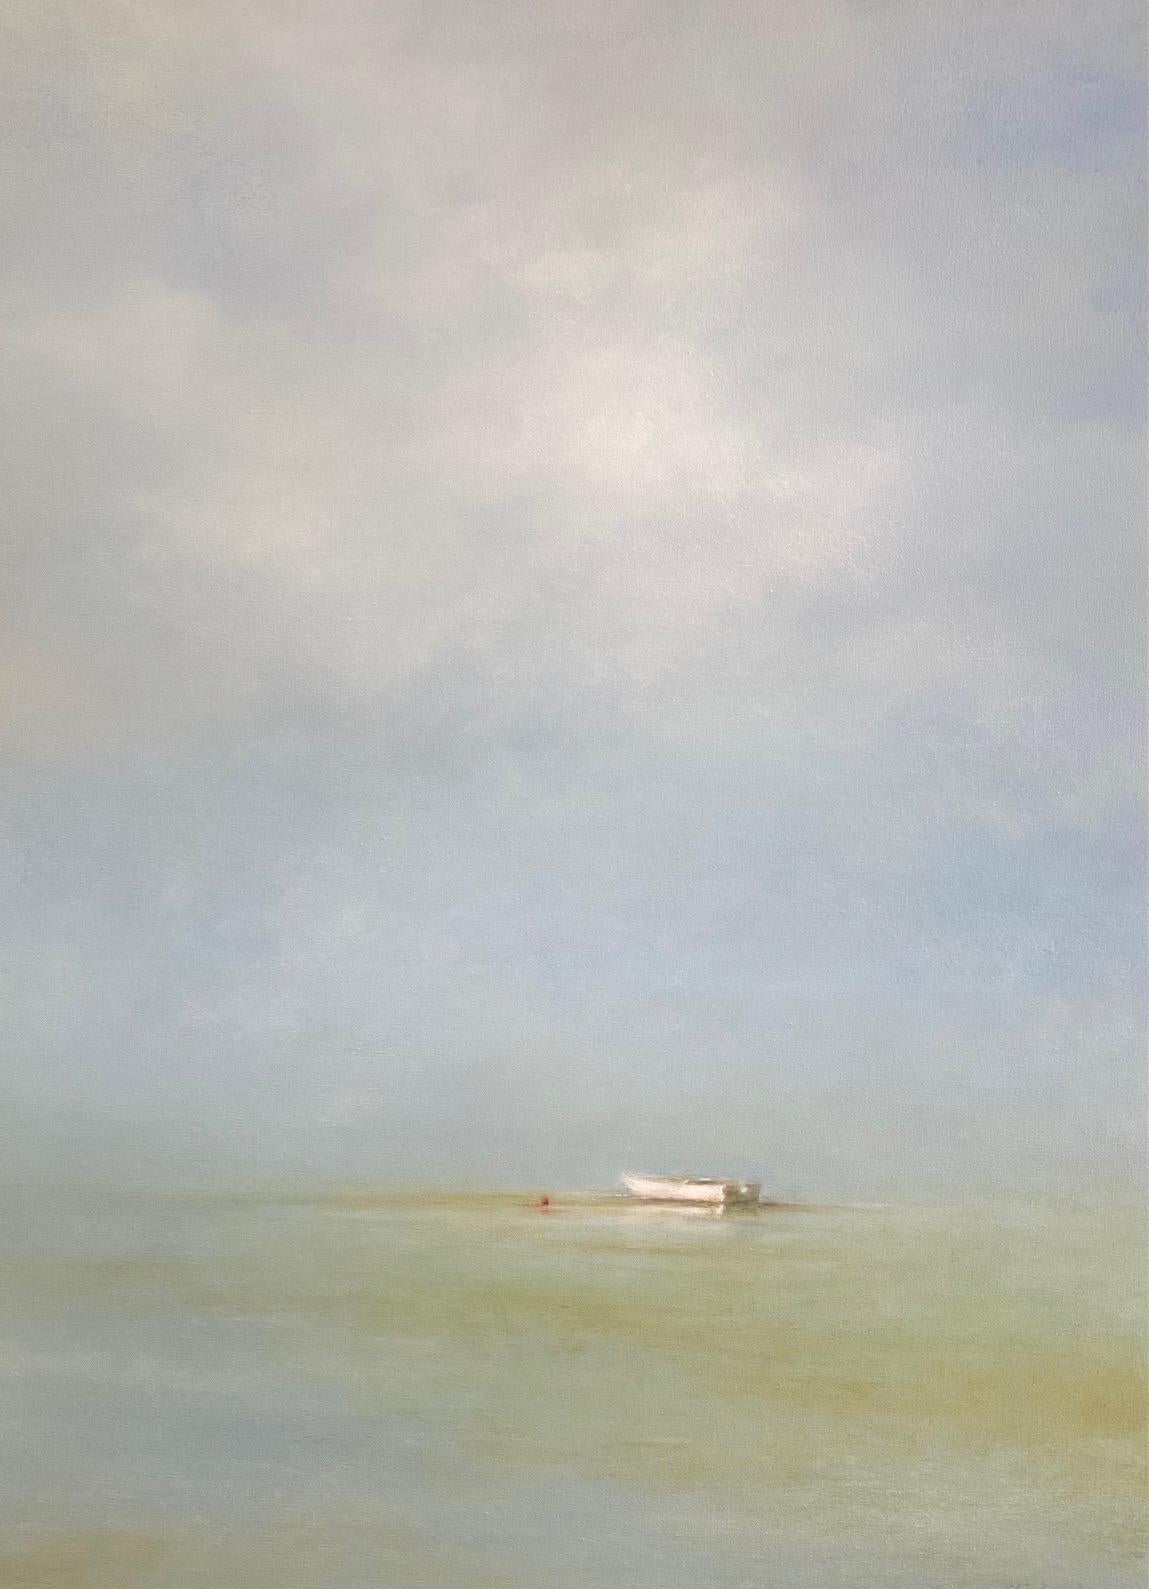 Chieh-Nie Cherng Landscape Painting - Dinghy at Sea, 40x30 original contemporary marine landscape